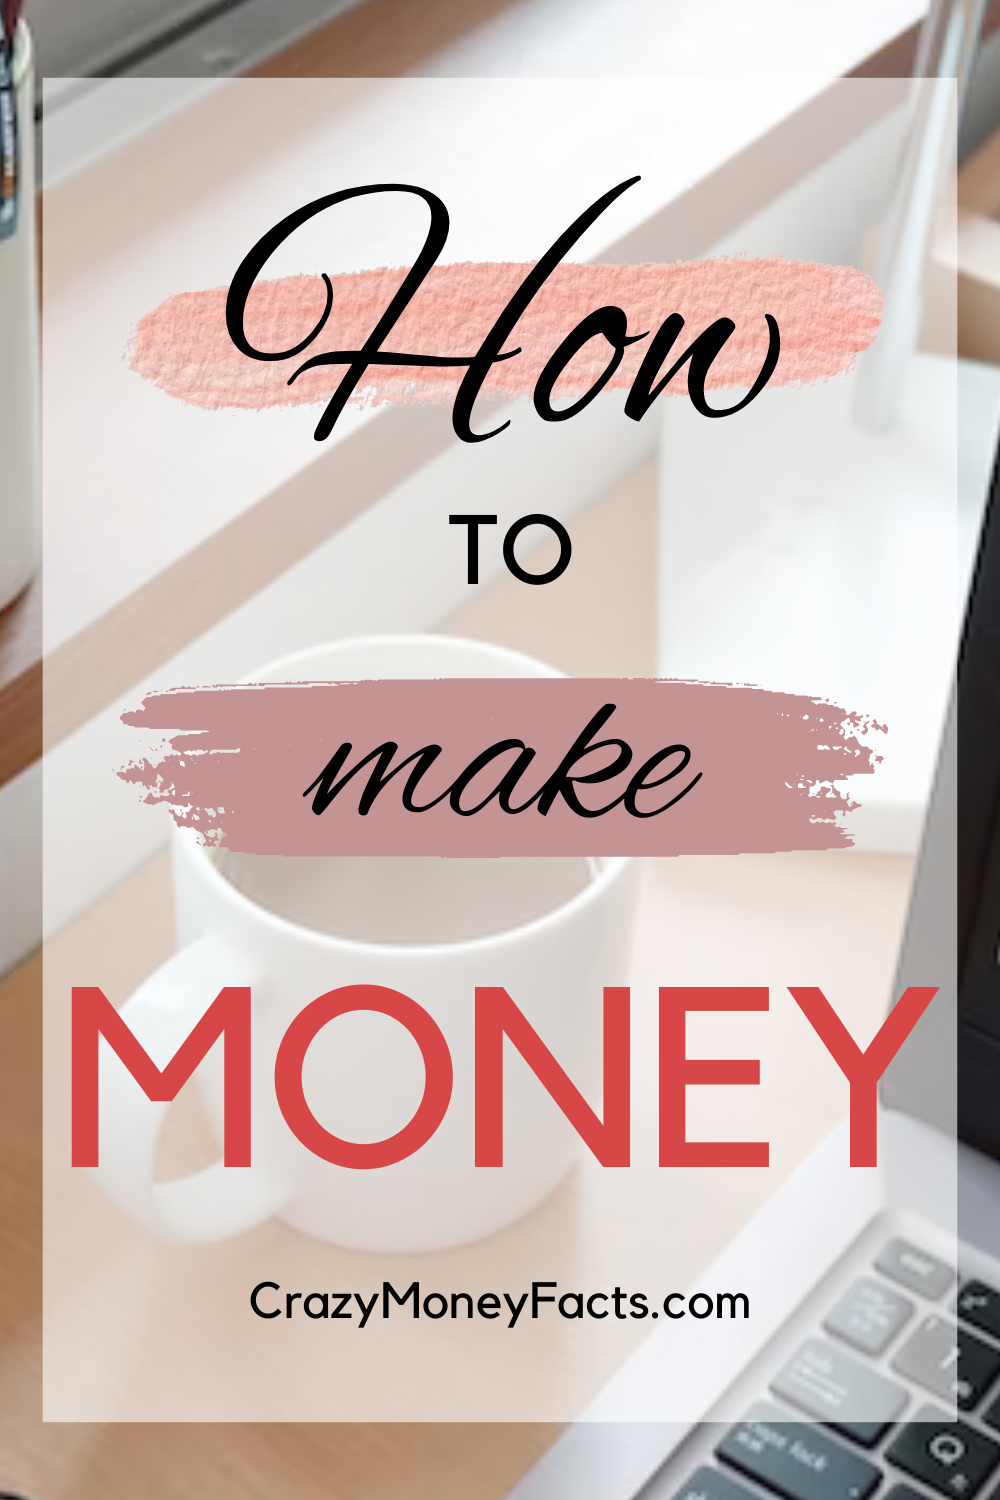 how to make money